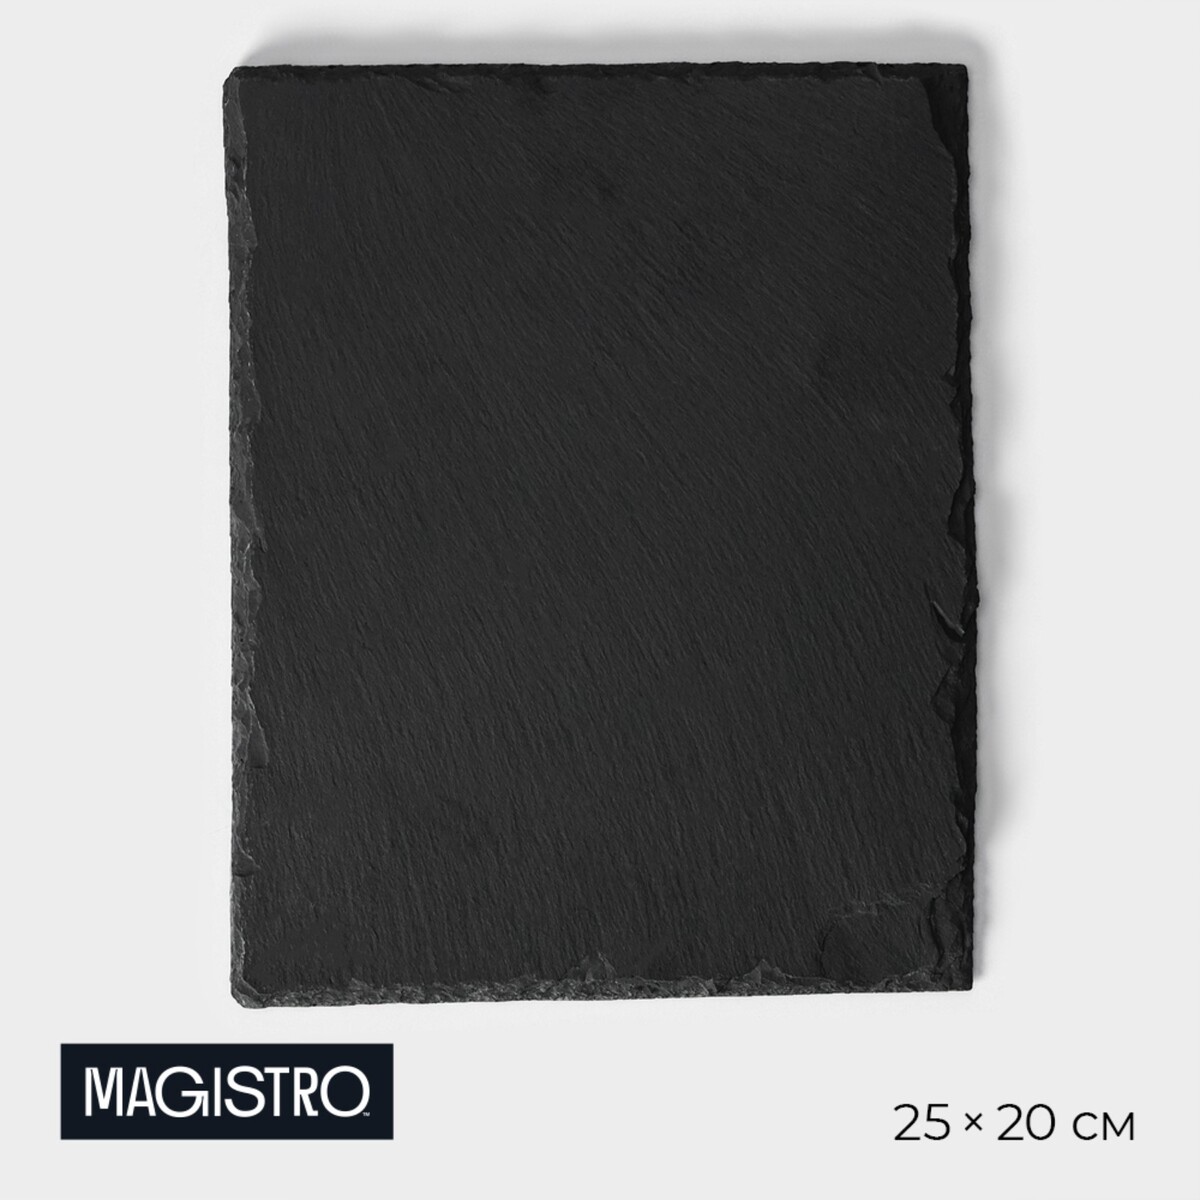 Доска для подачи из сланца magistro valley, 25×20 см доска для подачи magistro forest dream 33×20 см акация мрамор